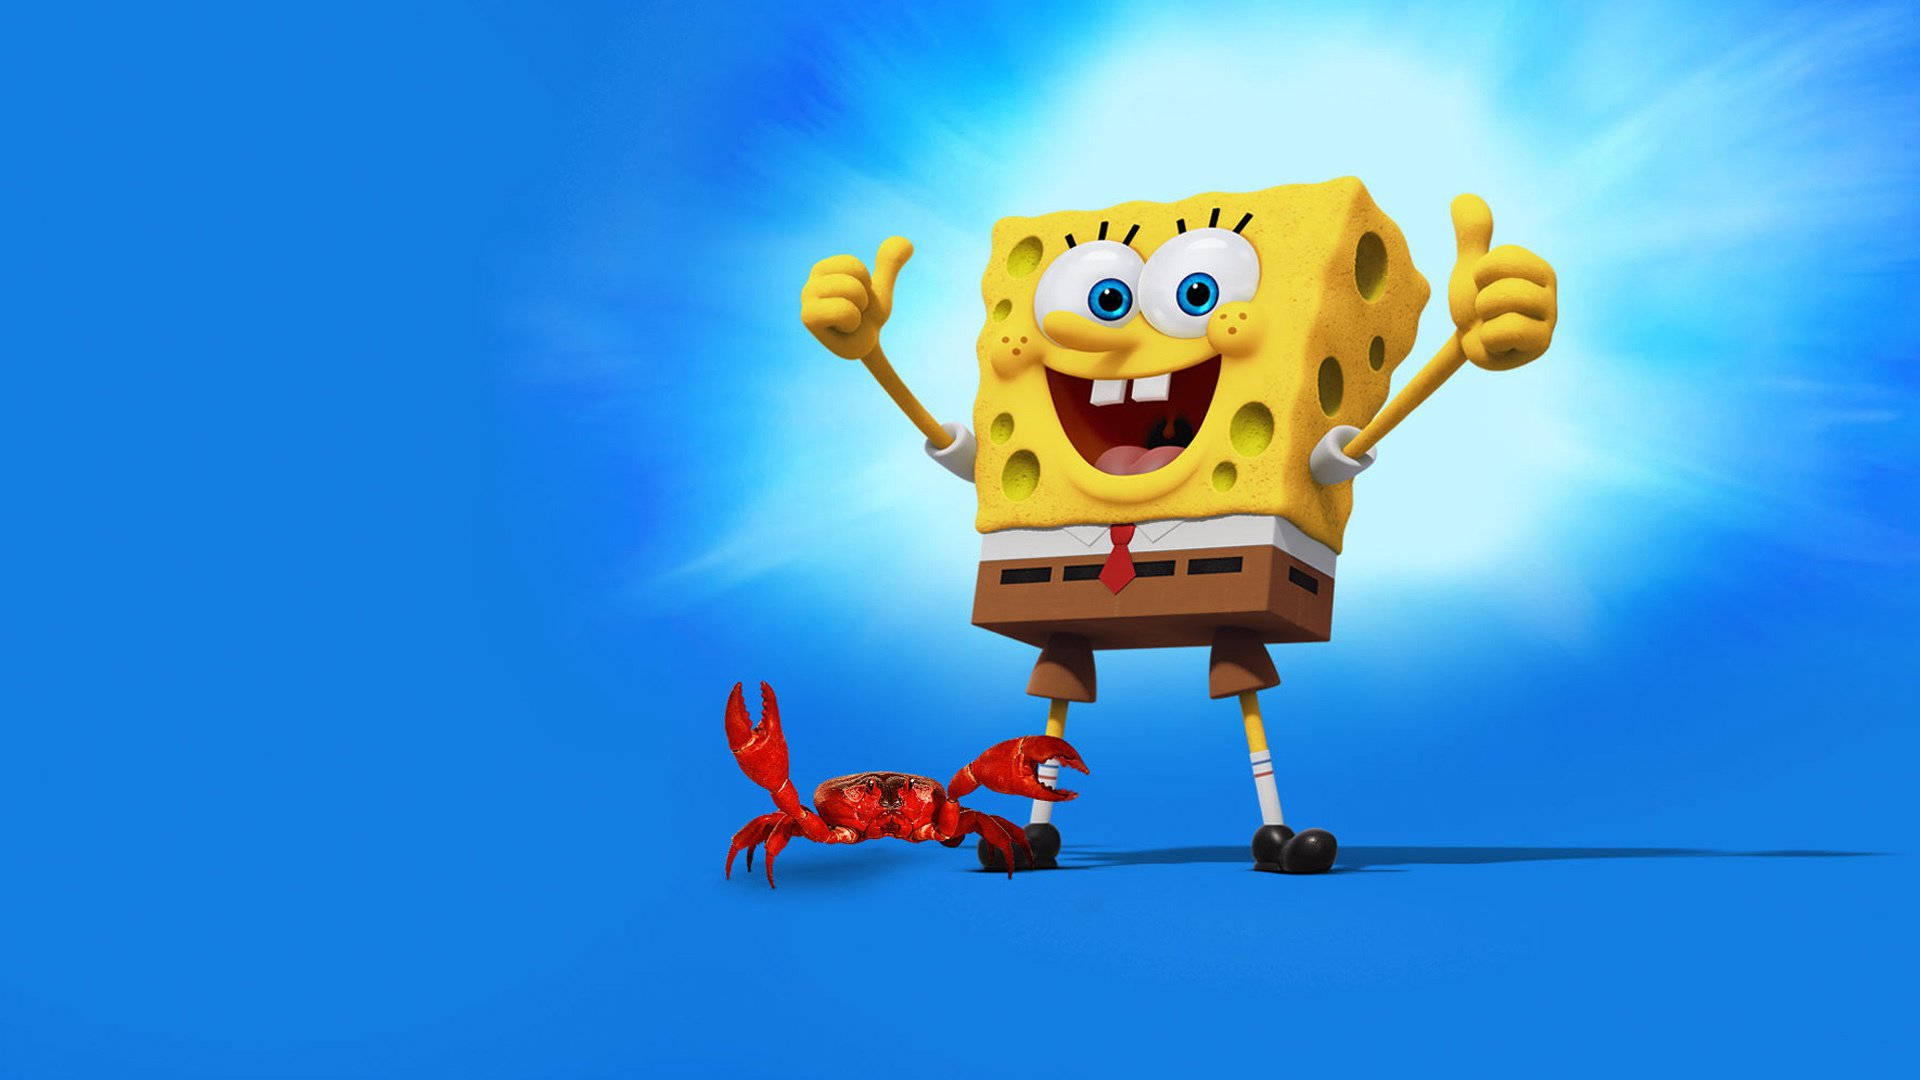 Free Funny Spongebob Wallpaper Downloads, [100+] Funny Spongebob Wallpapers  for FREE 